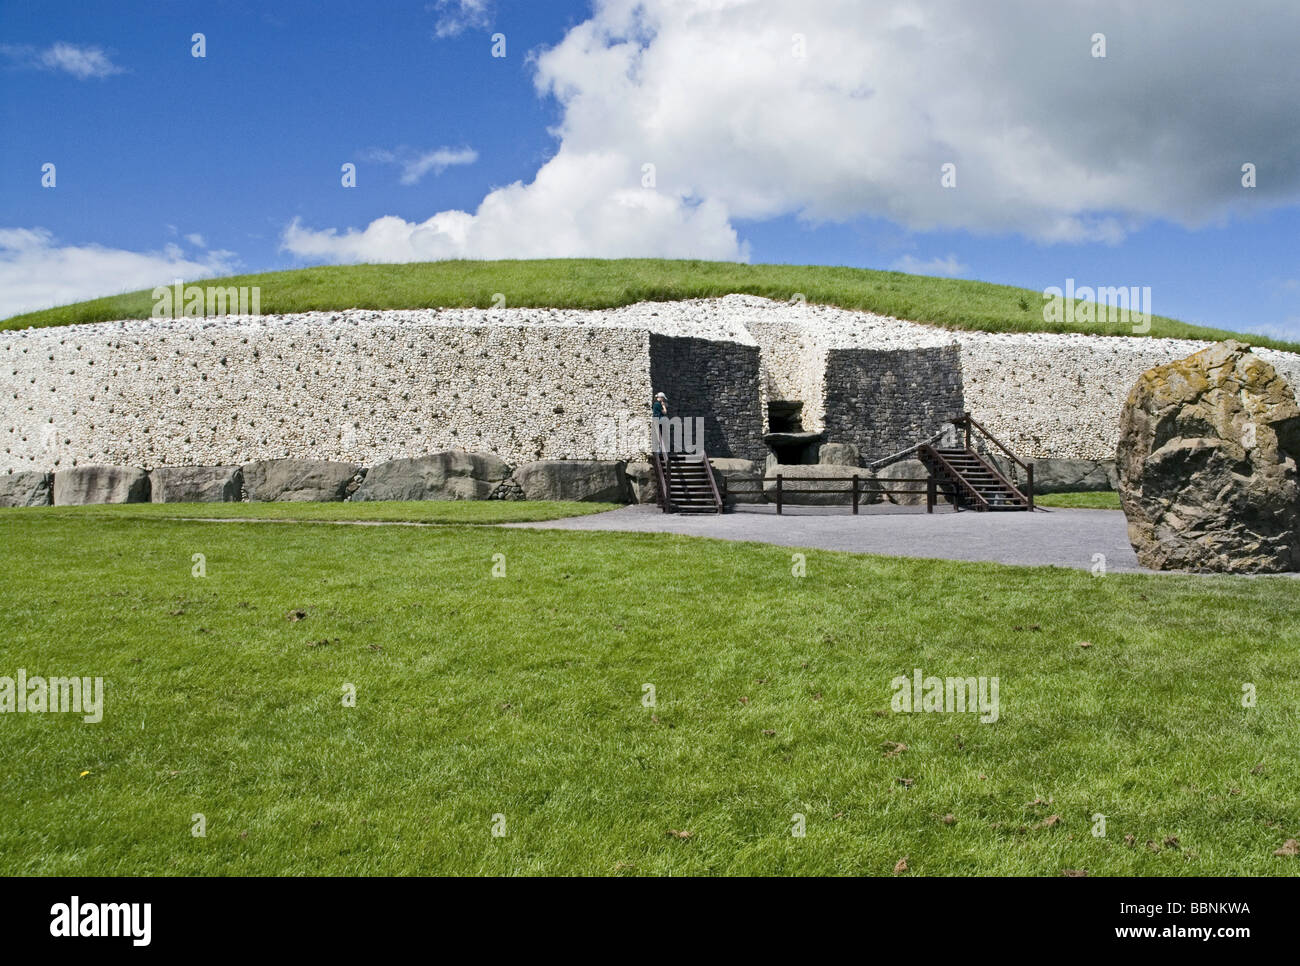 Géographie / voyage, Irlande, Newgrange, mégalithe complexe, tombeau hill, entrée privée, vers 5000 ans,-Additional-Rights Clearance-Info-Not-Available Banque D'Images